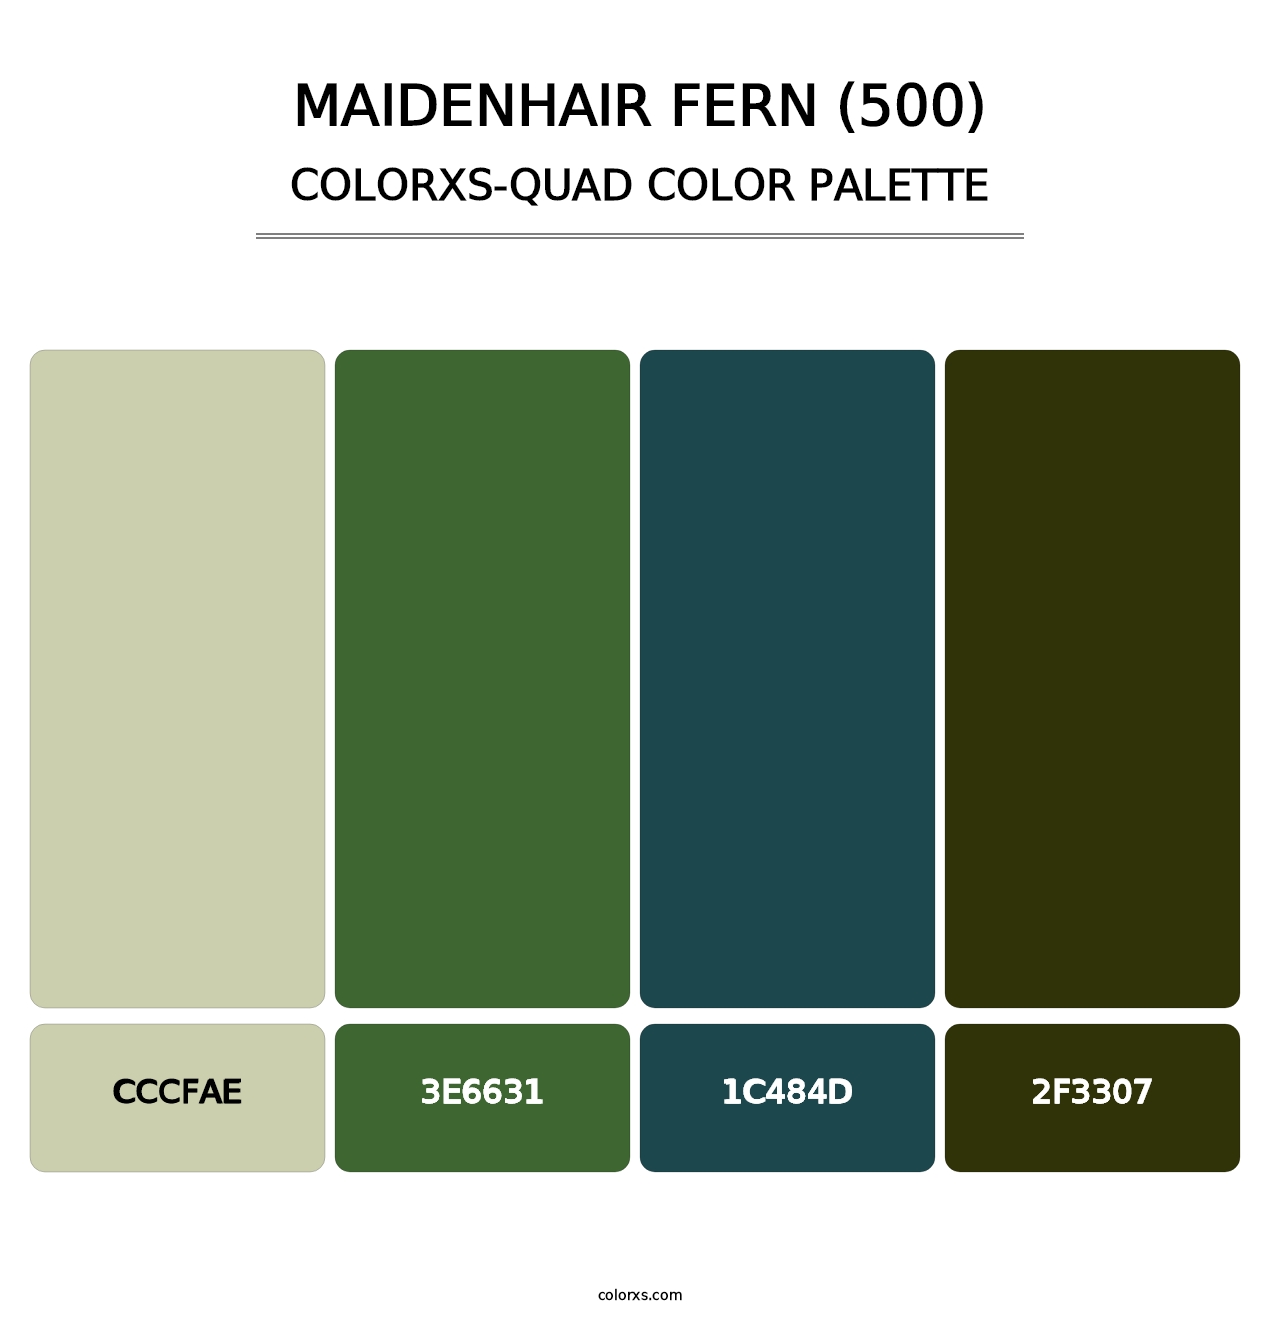 Maidenhair Fern (500) - Colorxs Quad Palette